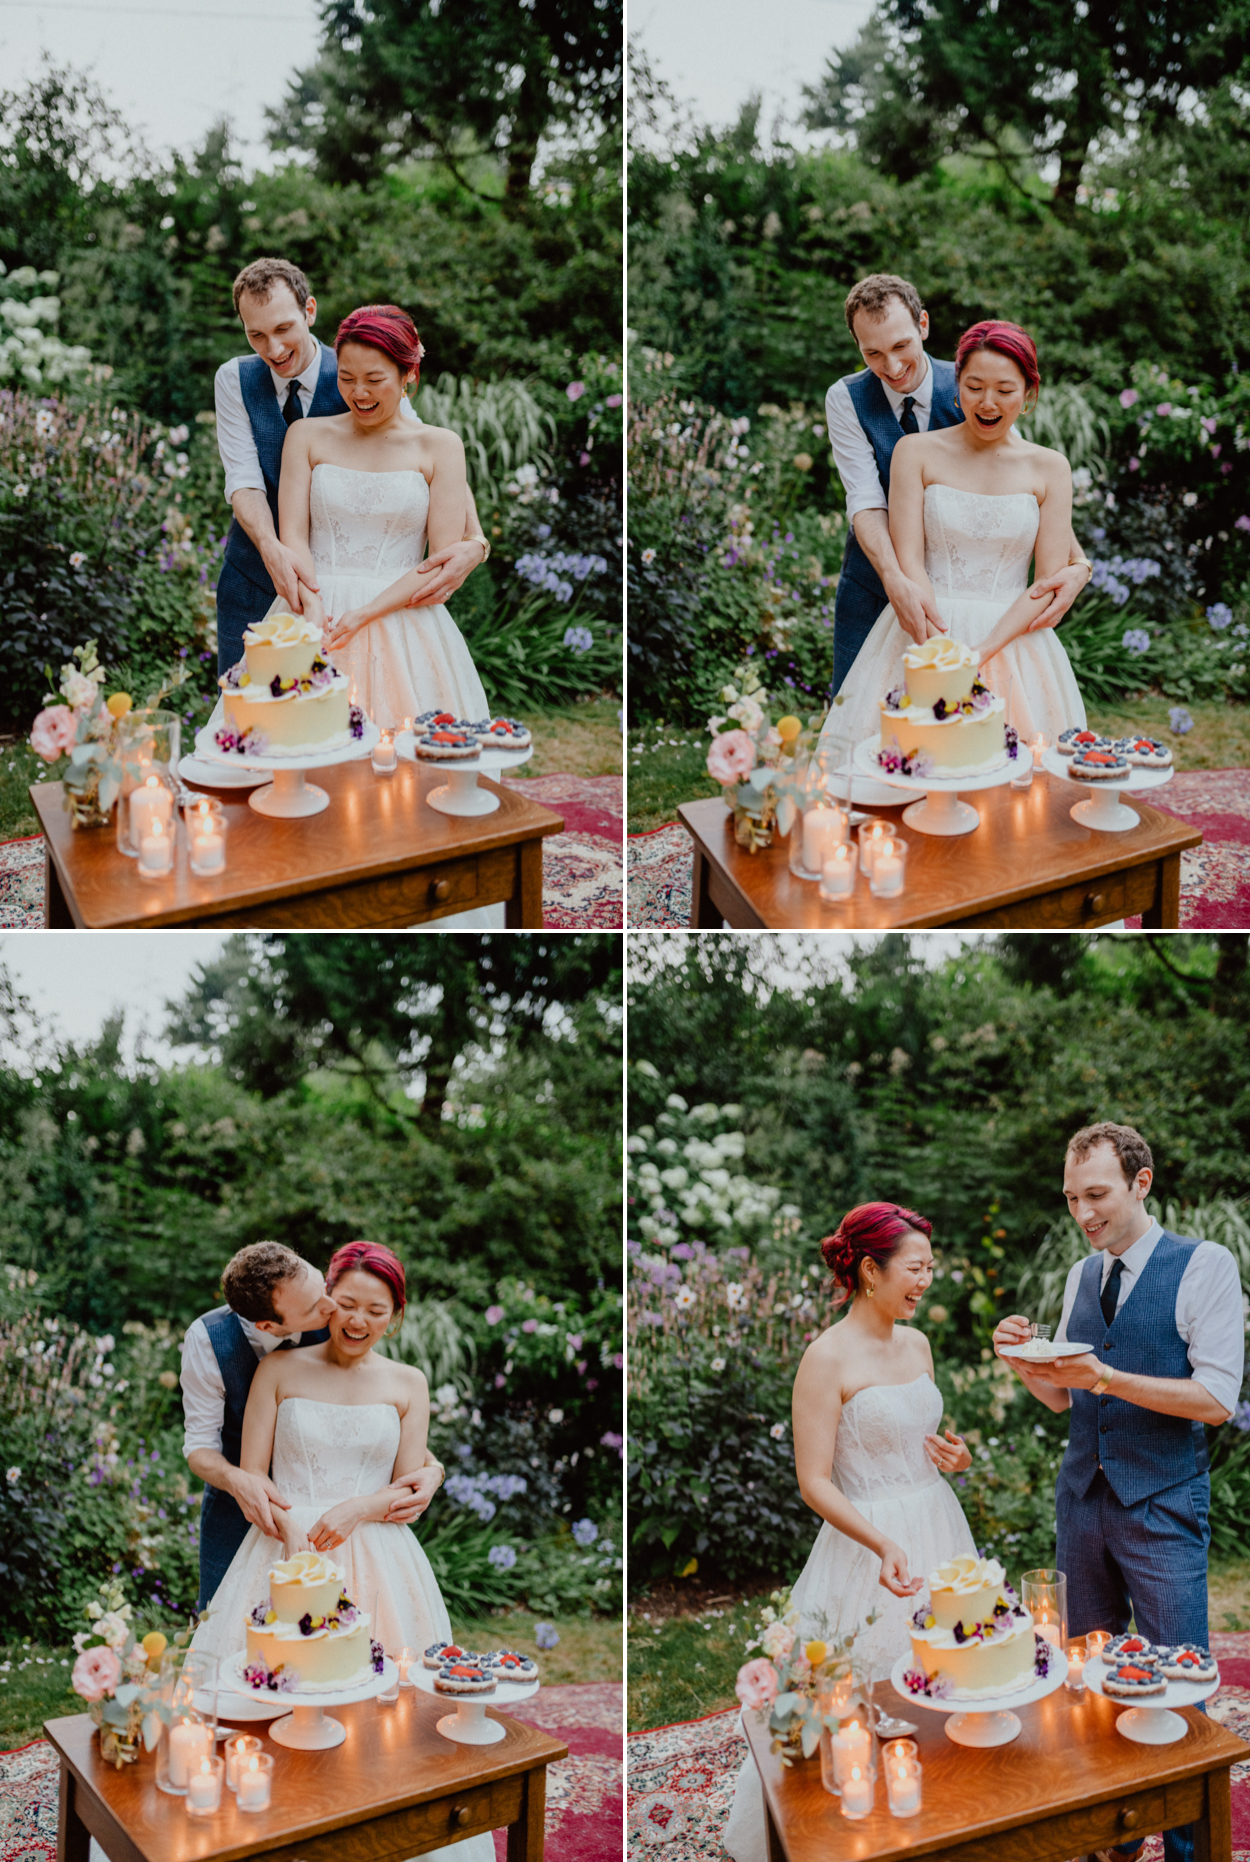 Bride and groom feeding each other cake, Wedding Cake by TM Dessert Works